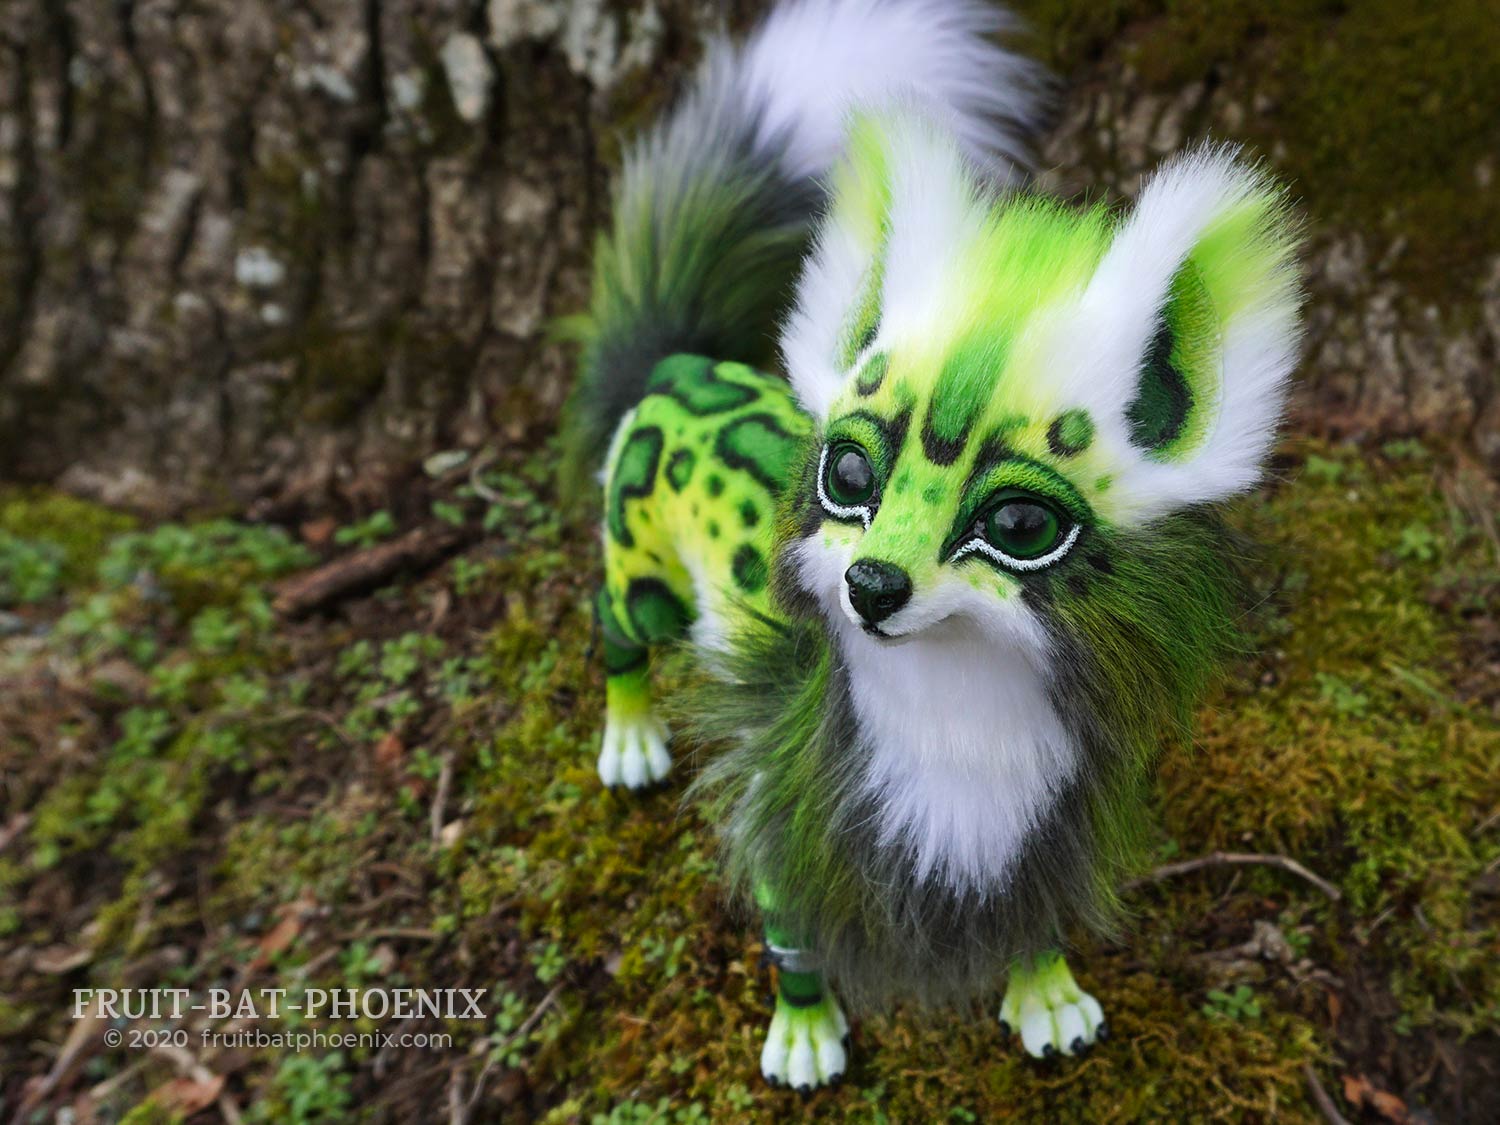 Chlorophyll green fox posable art doll looks up cutely.